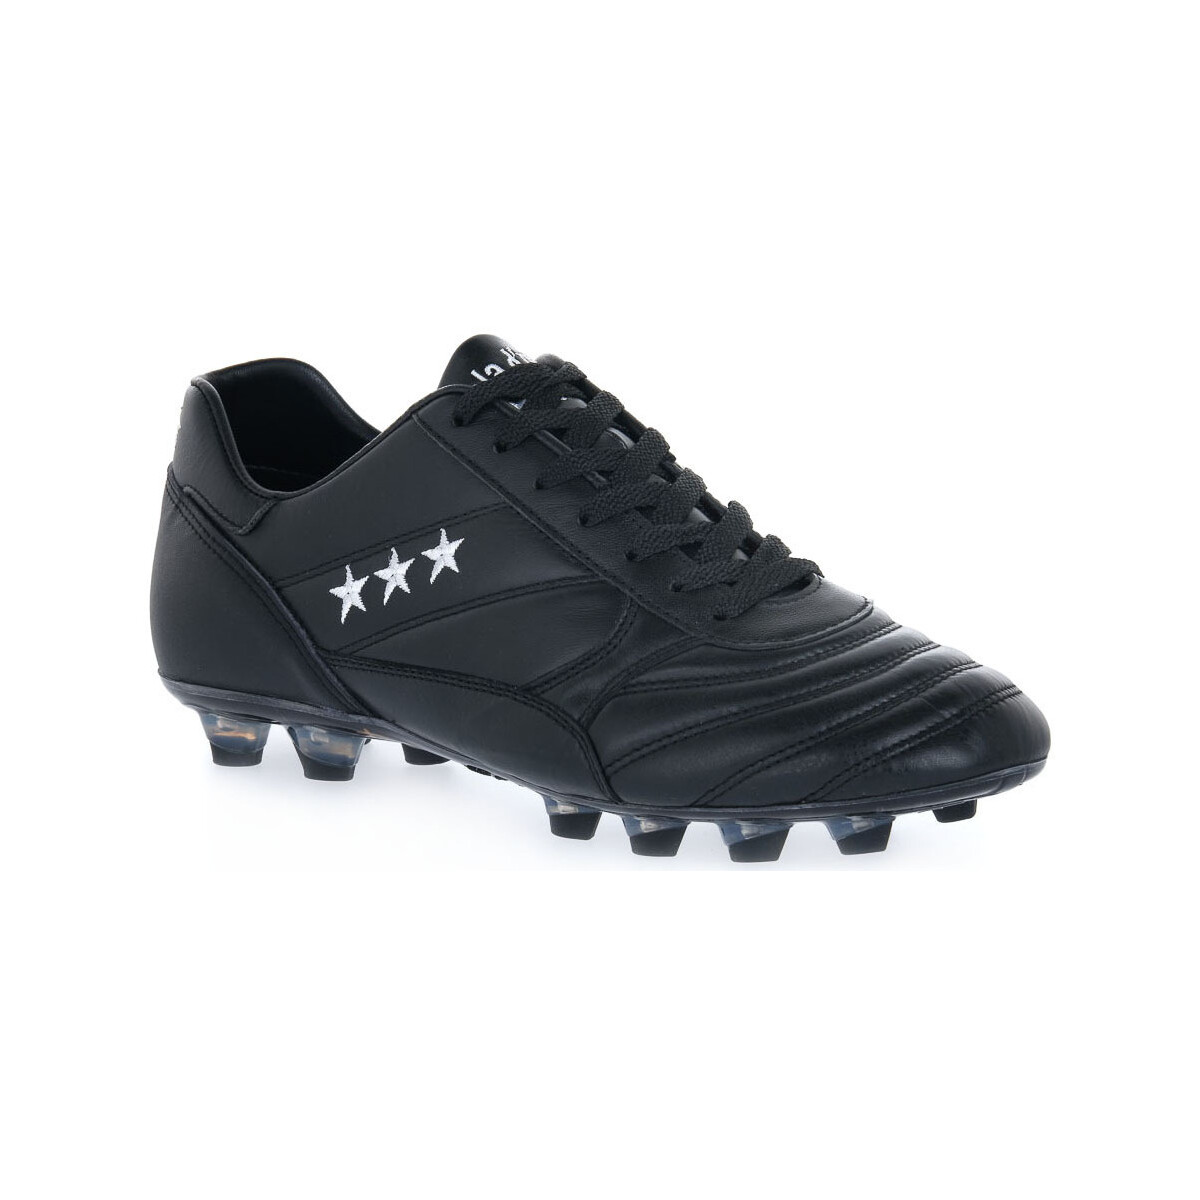 Topánky Muž Futbalové kopačky Pantofola d'Oro ALLORO PU NERO Čierna